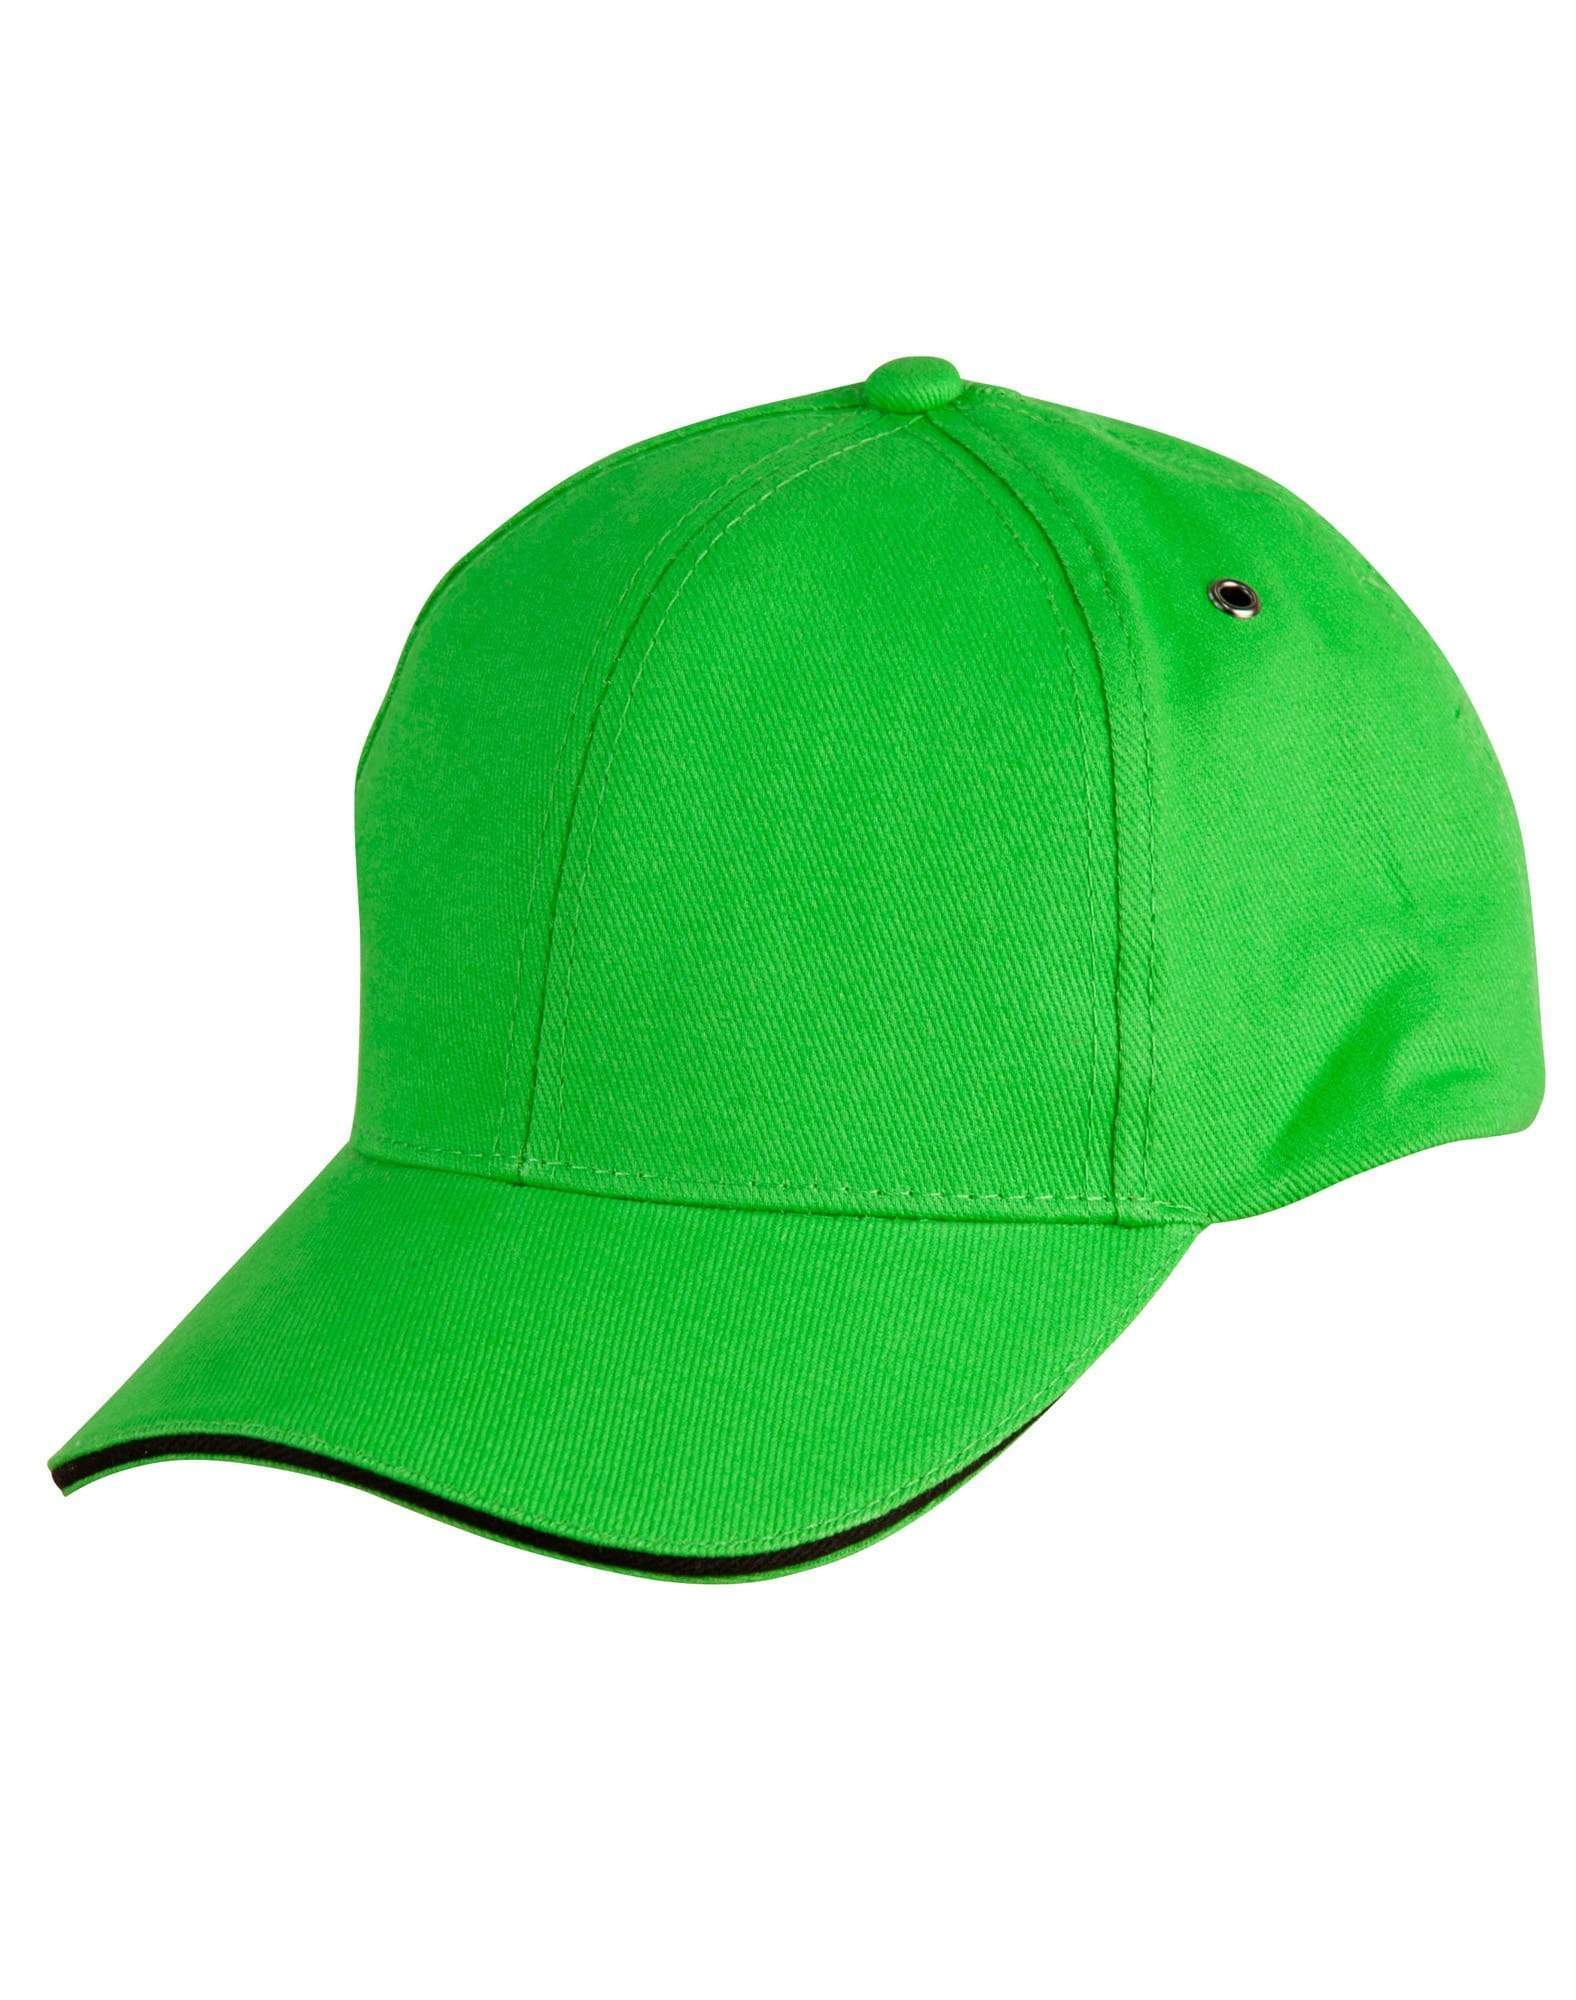 Sandwich Peak Cap Ch18 Active Wear Winning Spirit Lime Green/Black One size fits most 